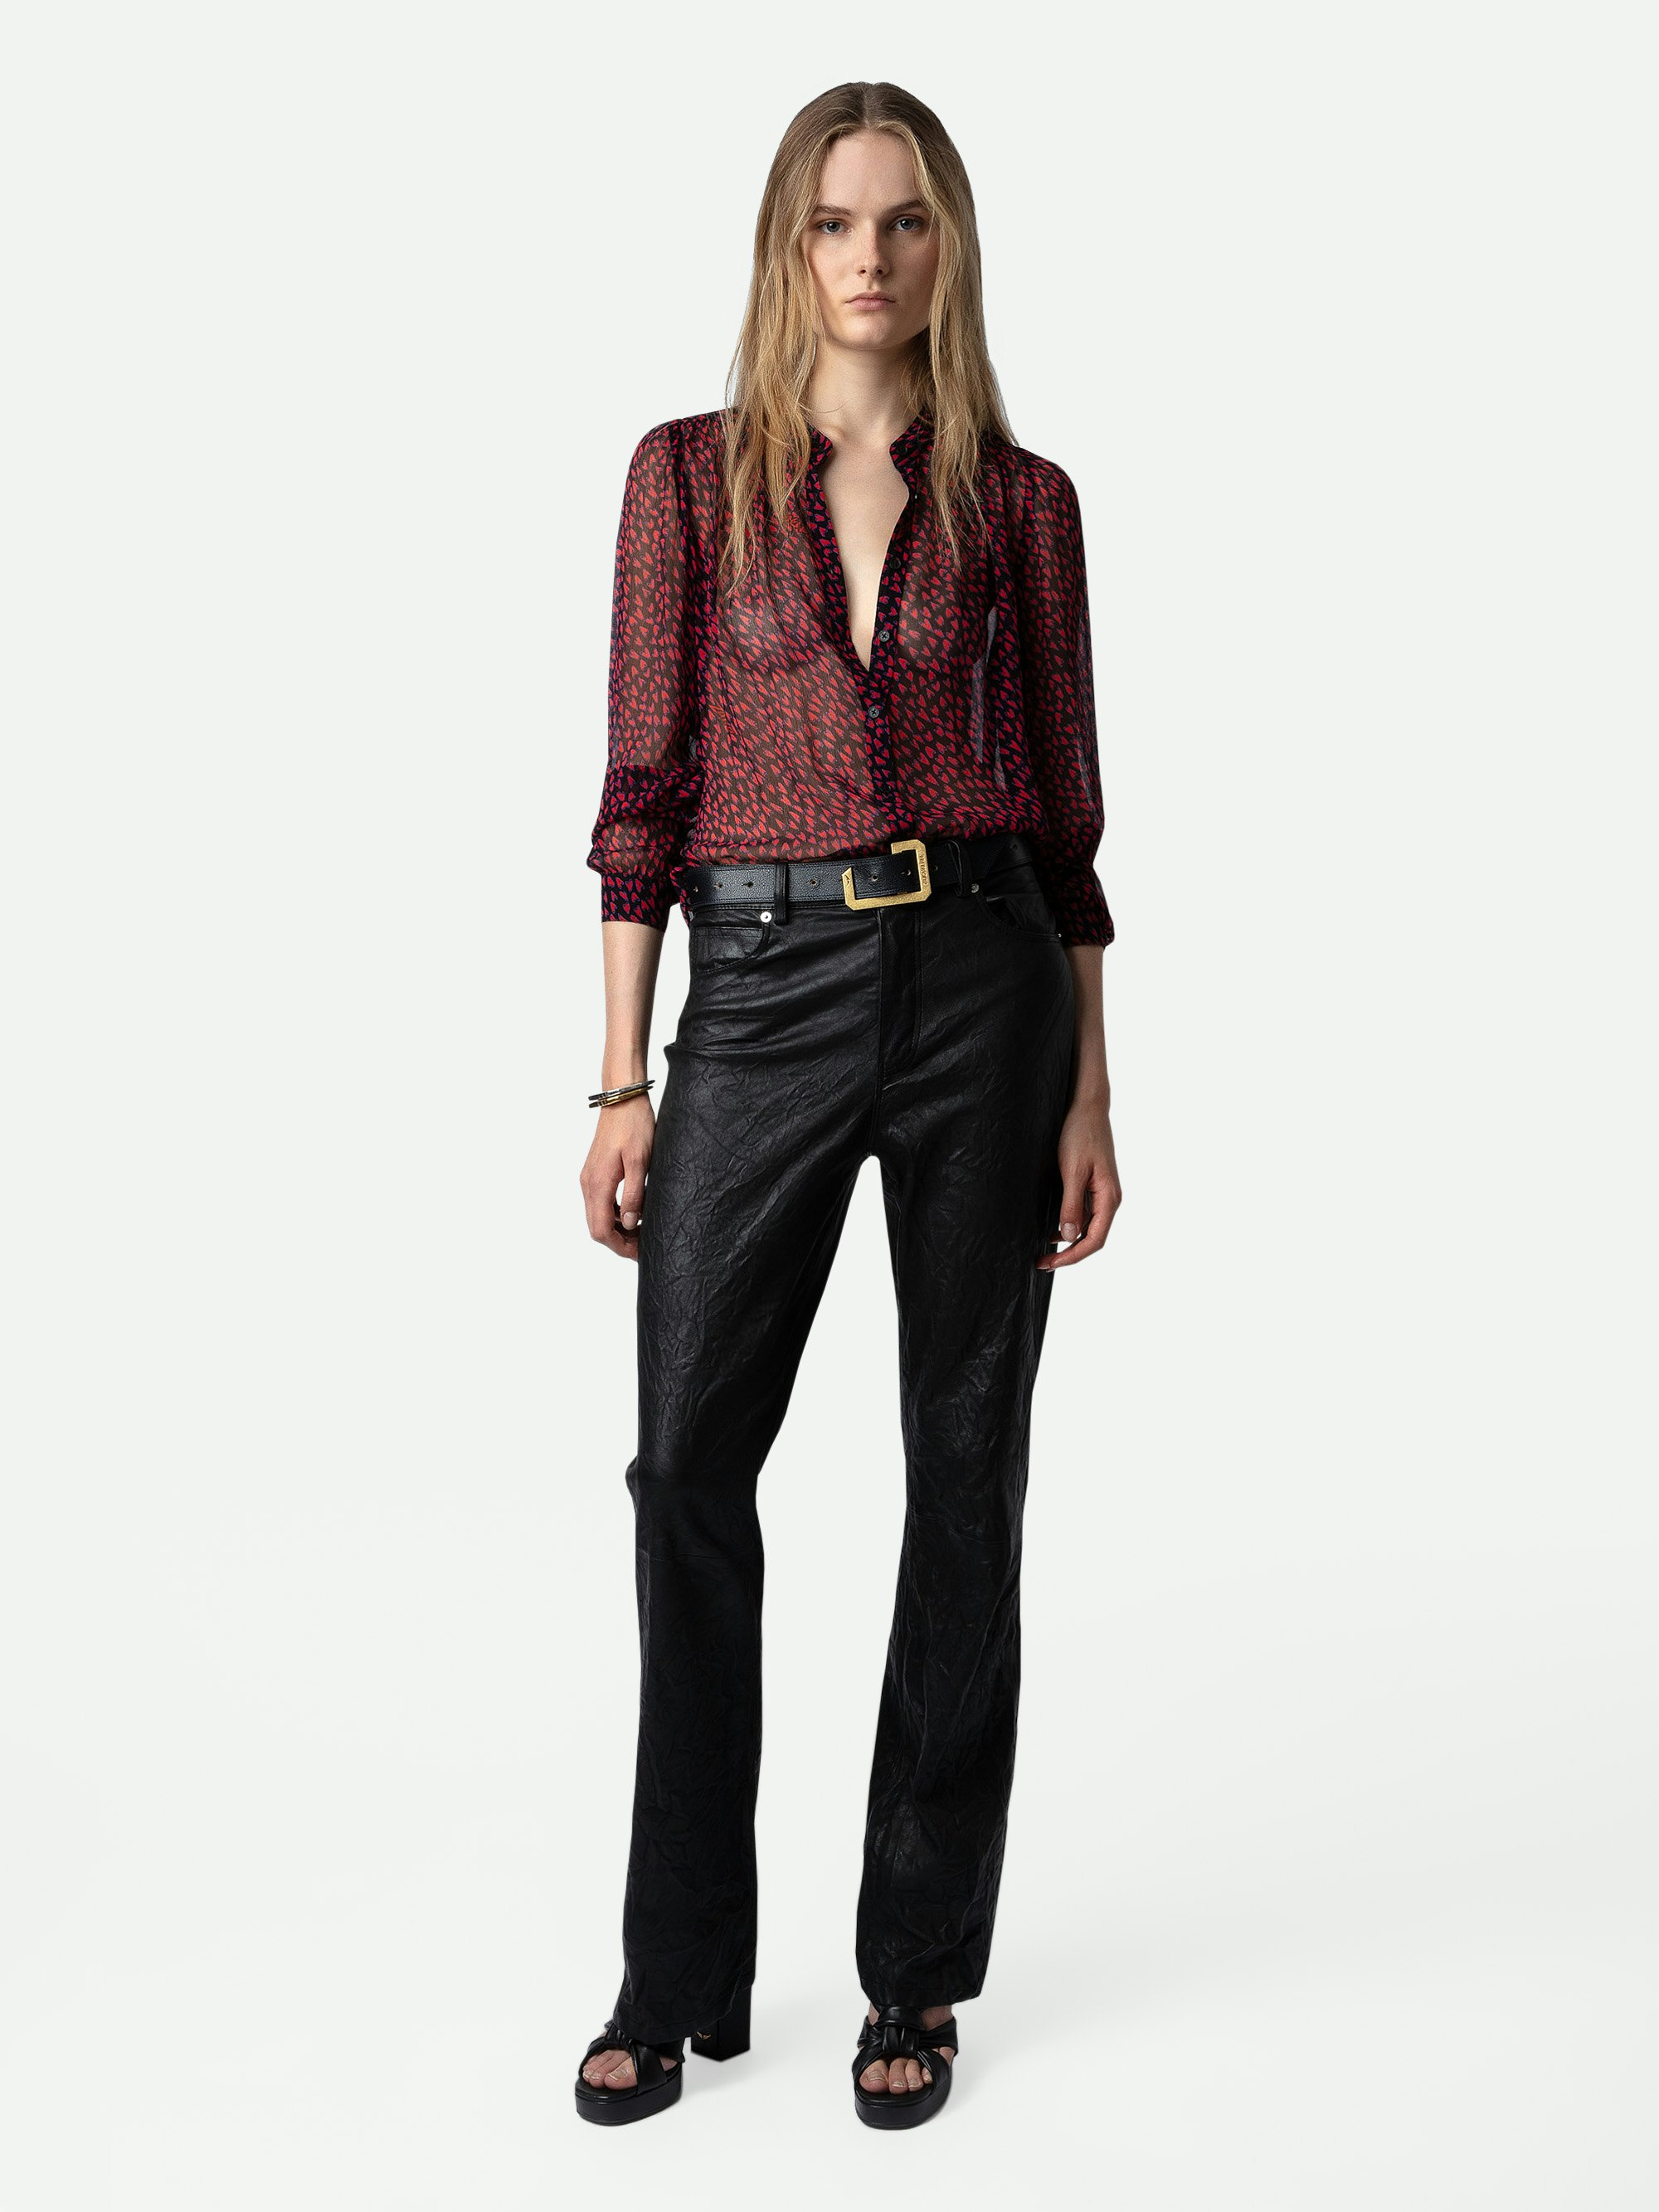 Tino Crush Shirt - Black sheer shirt with button fastening, long sleeves and Crush print.